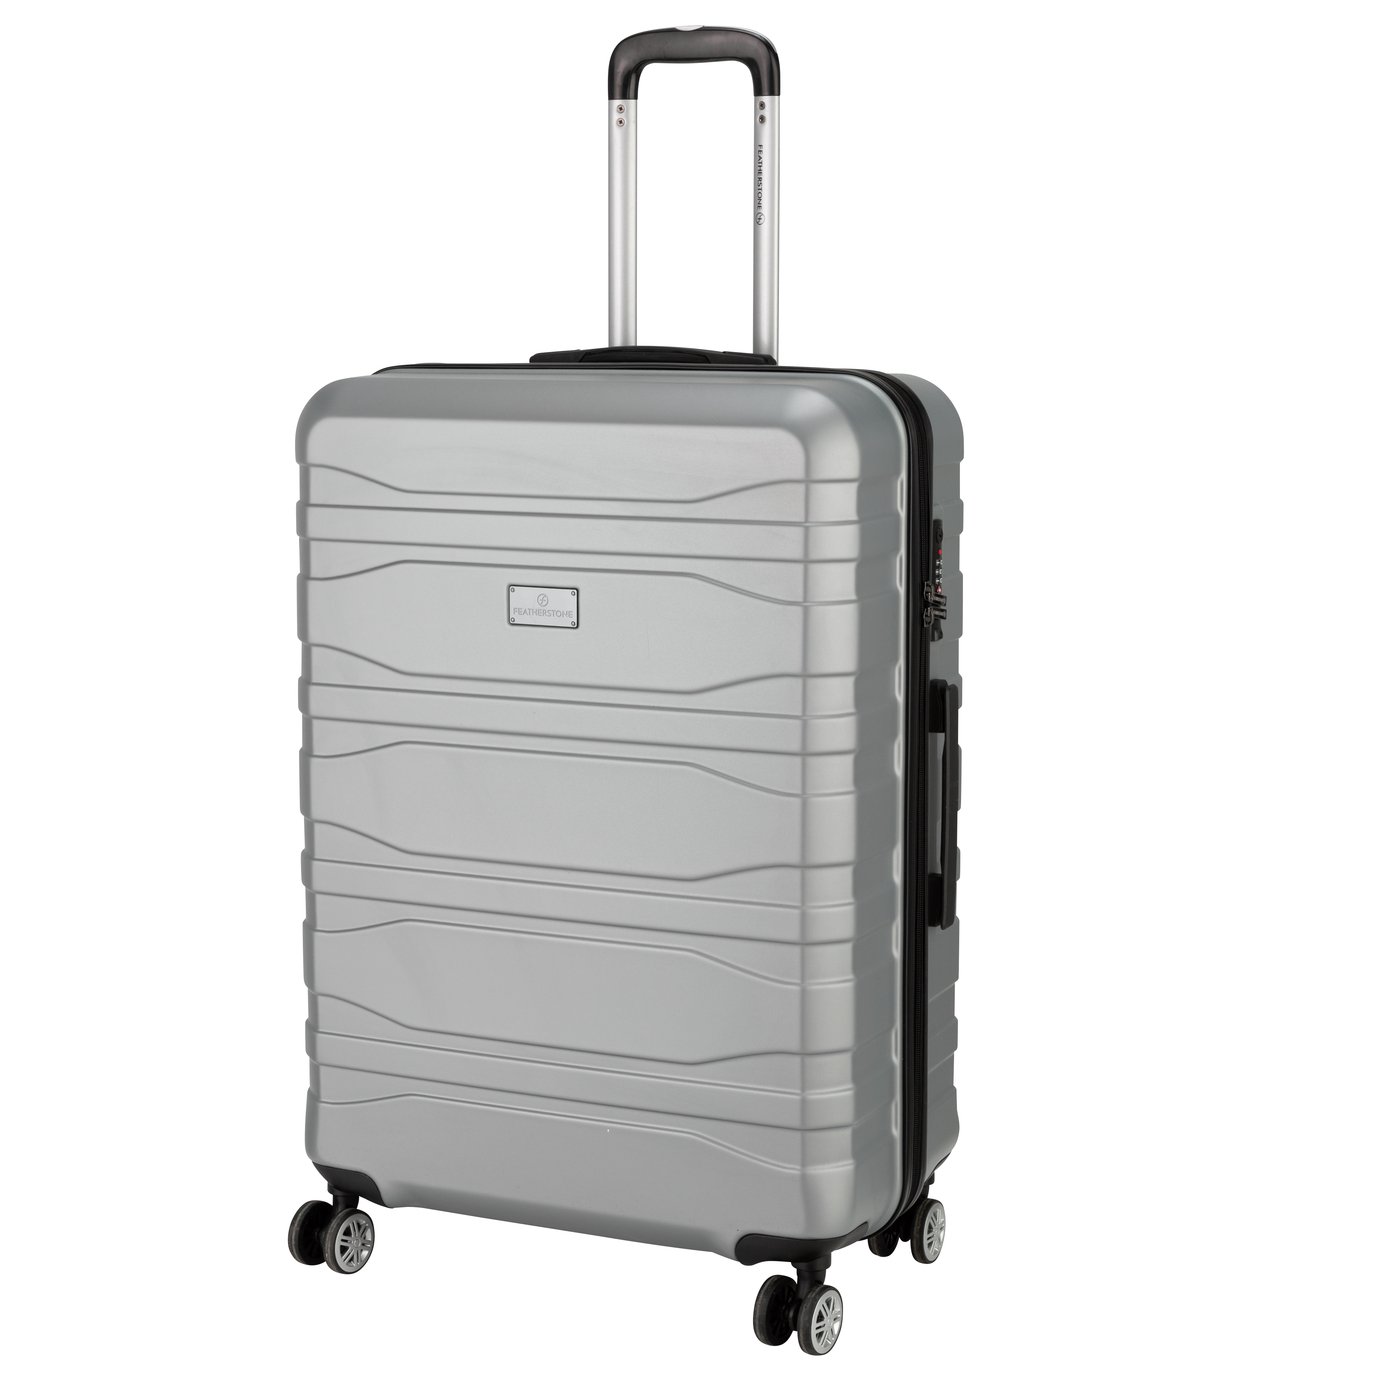 Featherstone 8 Wheel Hard Large Suitcase - Silver